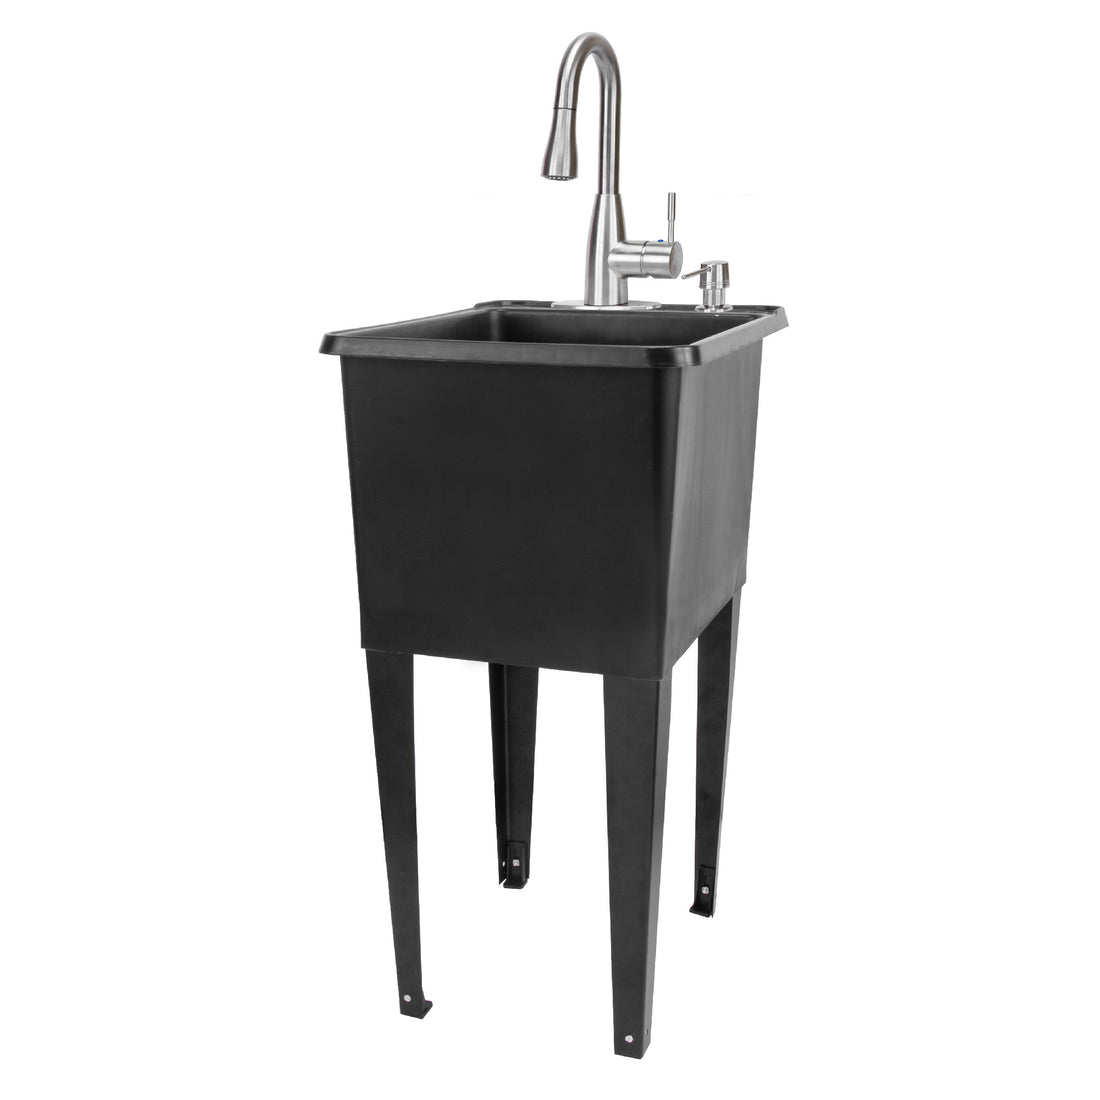 Tehila Space Saver Freestanding Black Utility Sink with Stainless Steel Finish Low-Profile Pull-Down Faucet - Utility sinks vanites Tehila